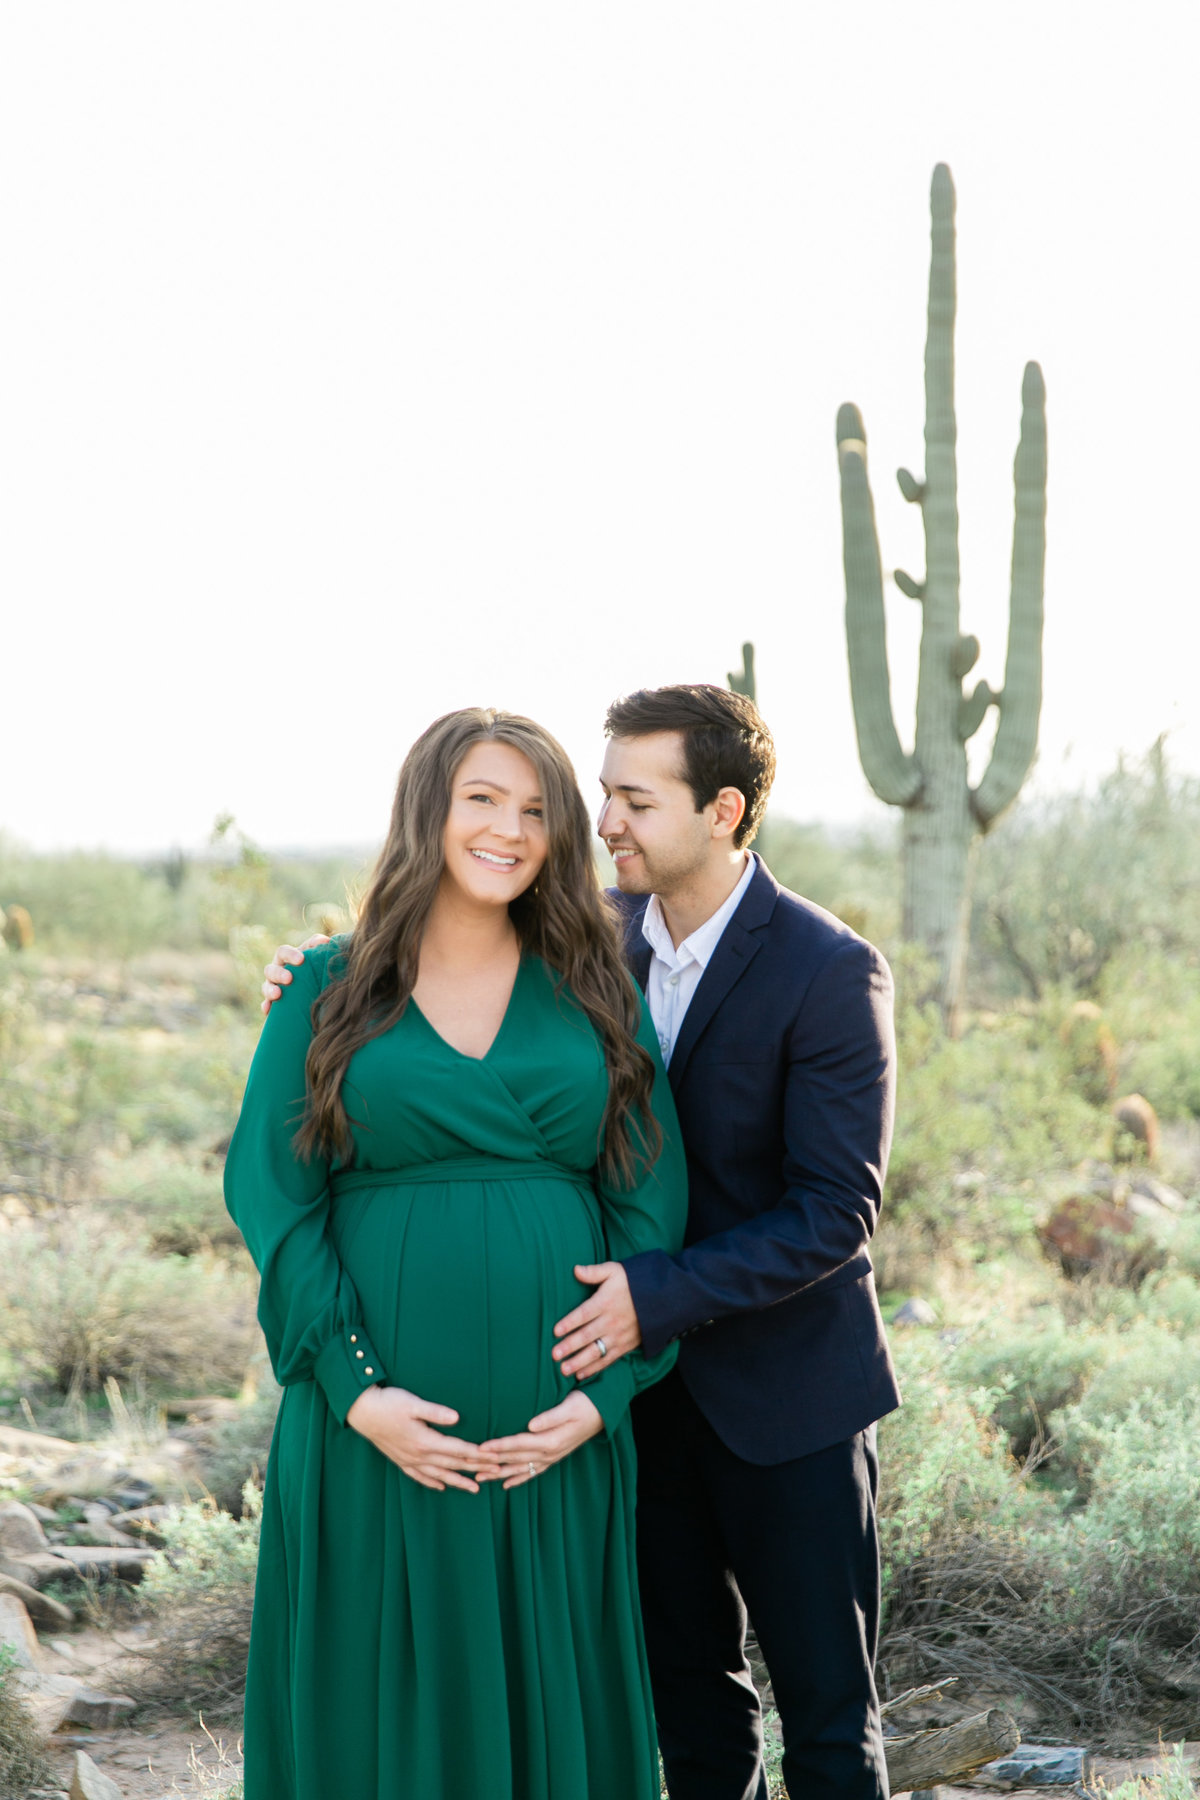 Karlie Colleen Photography - Scottsdale Arizona - Maternity Photos - Shelby & Cris-24